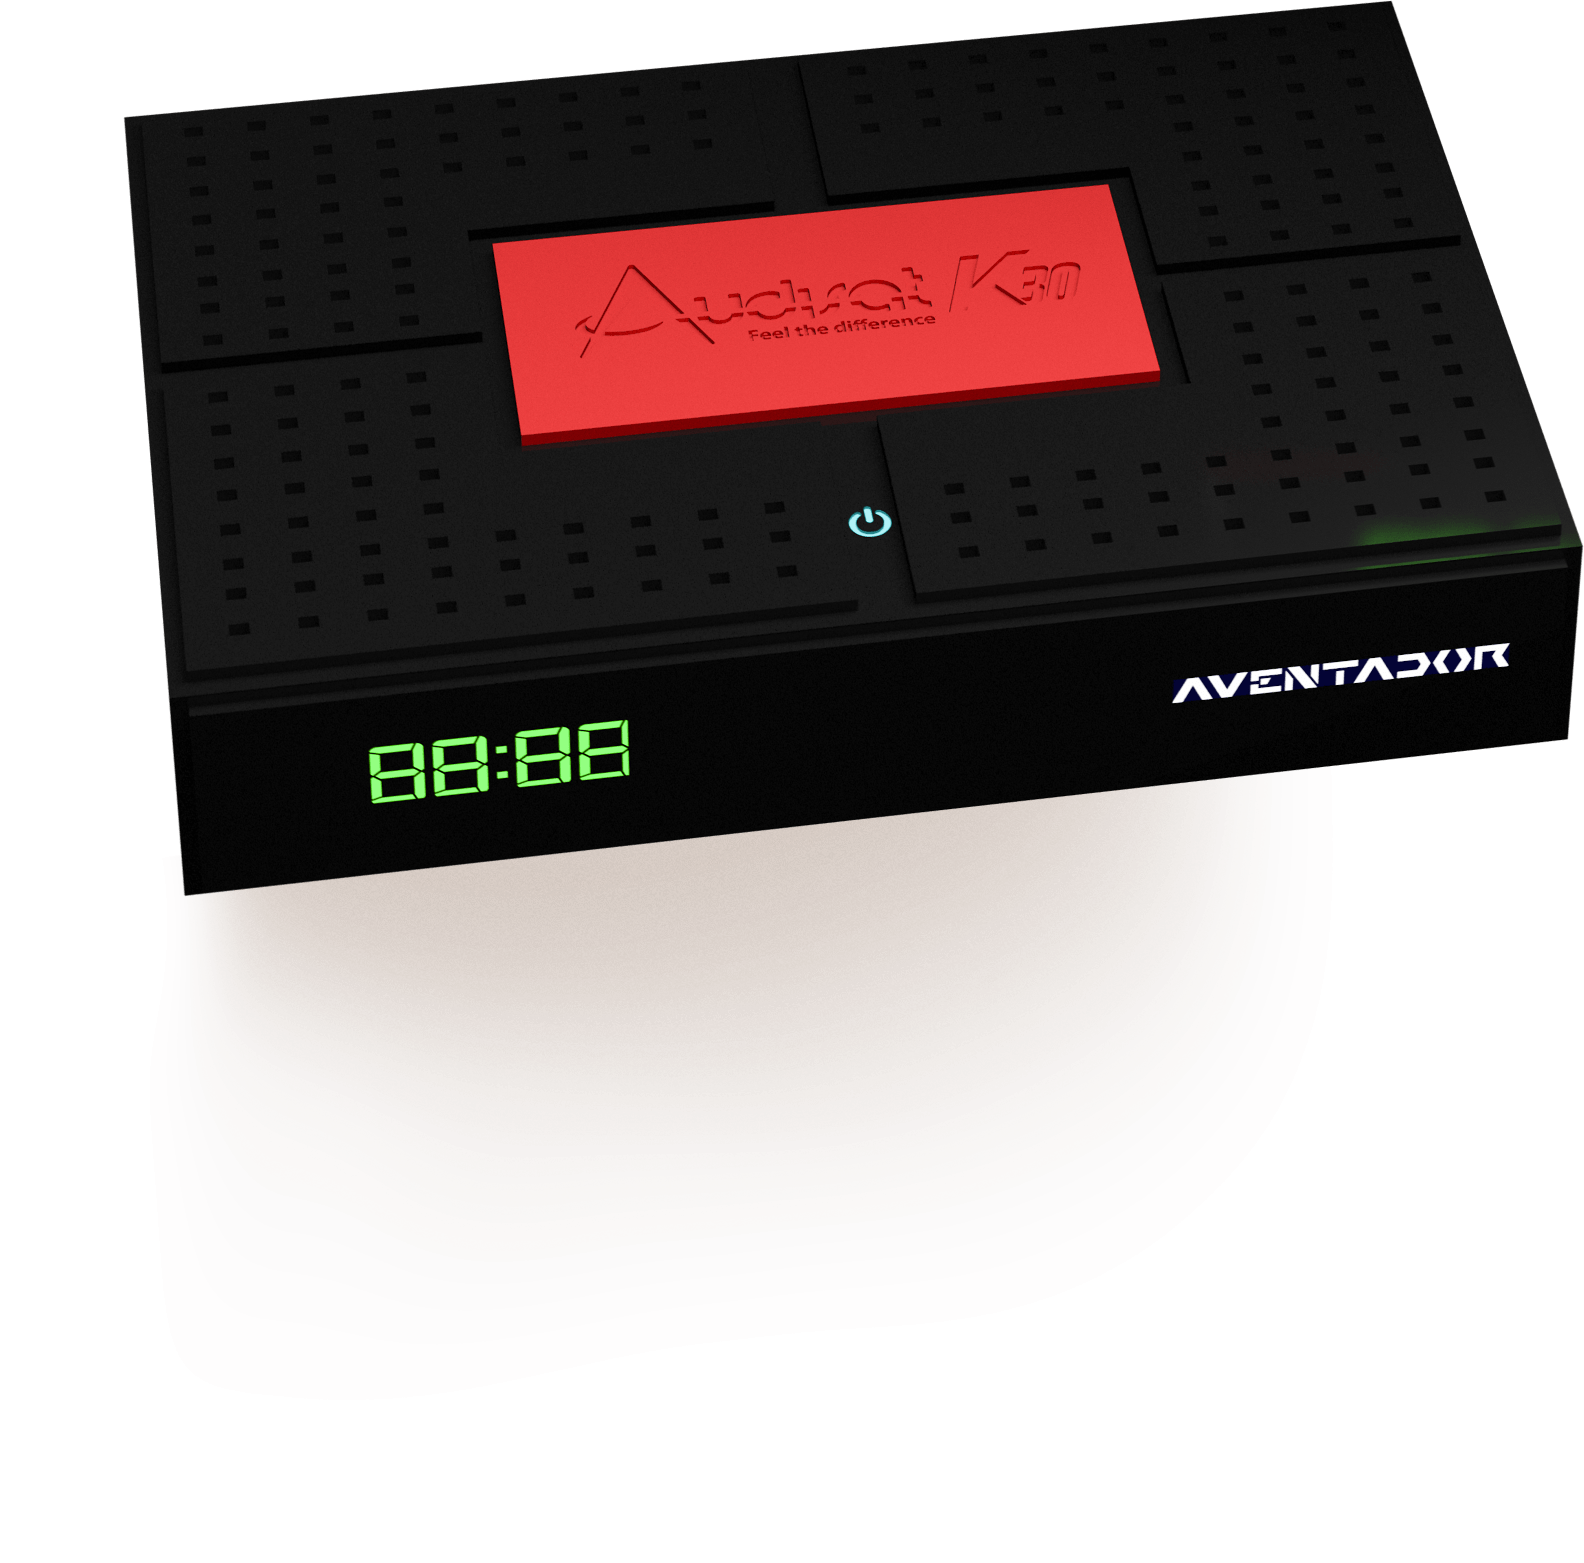 Receptor Audisat Aventador K30 Full HD ACM/Wi-Fi/HDMI 